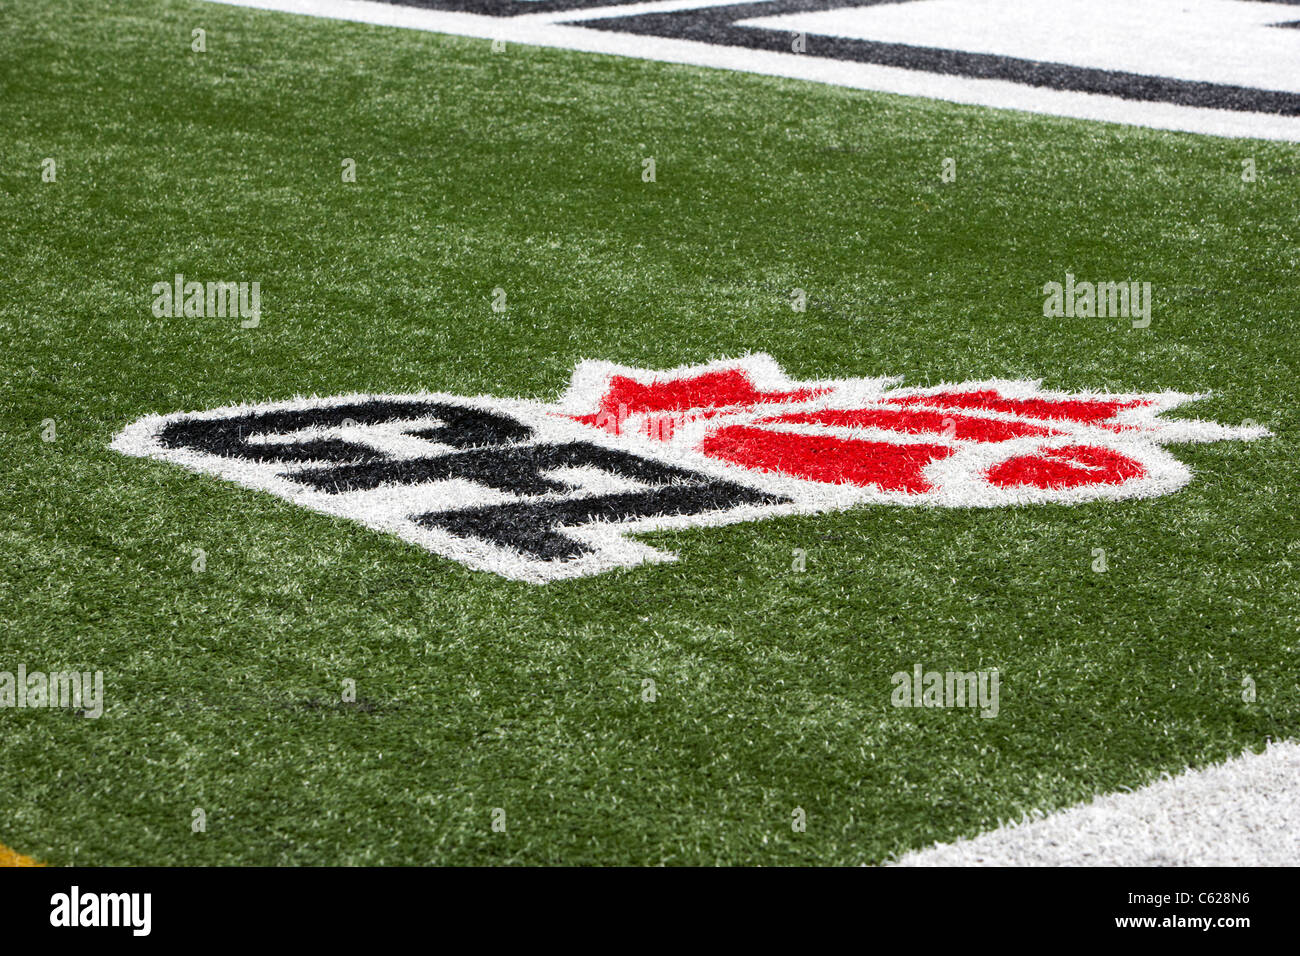 Logo cfl sur surface de gazon artificiel mosaic stadium taylor field regina canada Banque D'Images